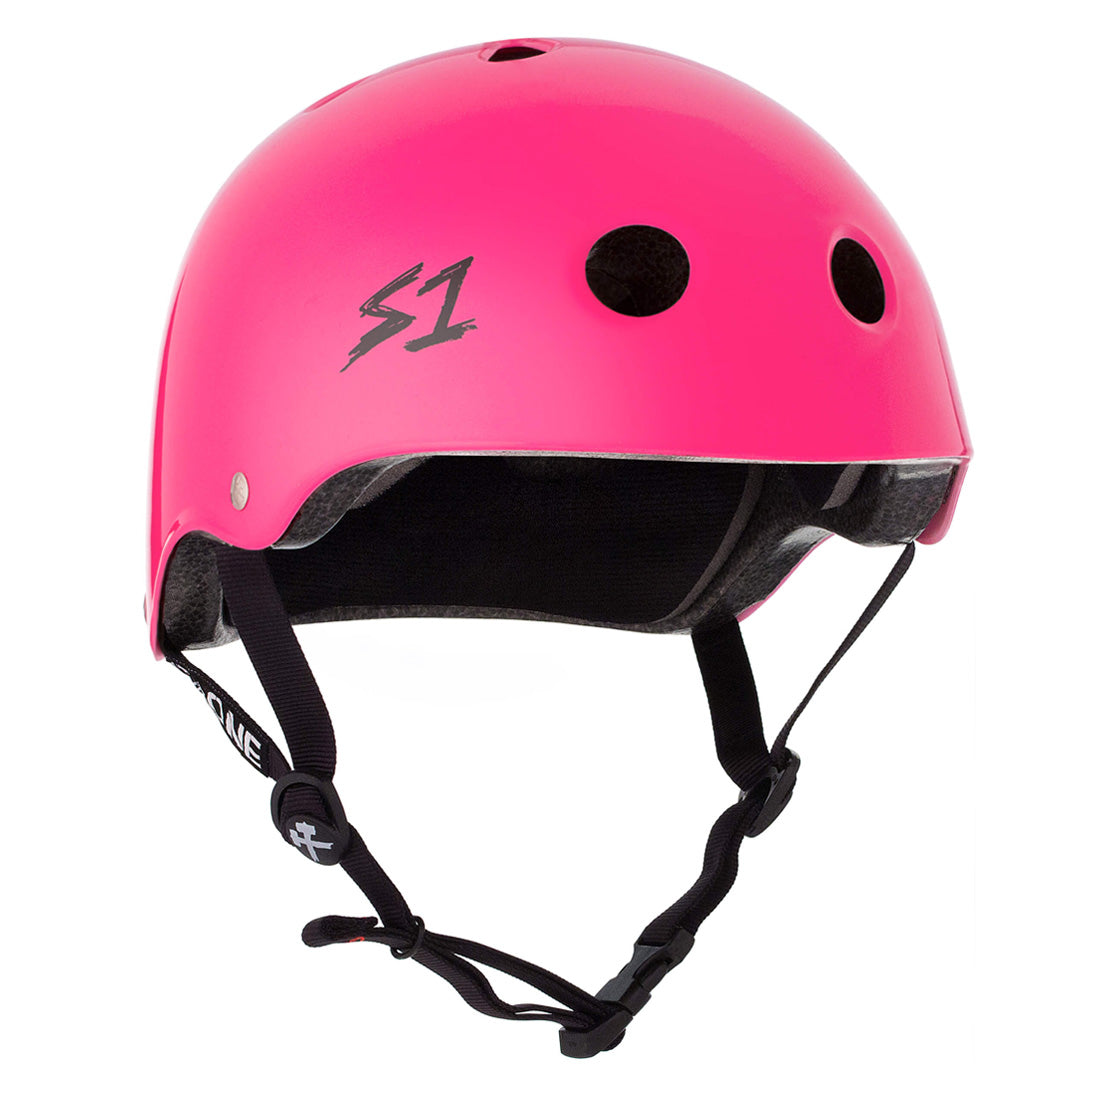 S-One Lifer Helmet - Hot Pink Gloss Helmets